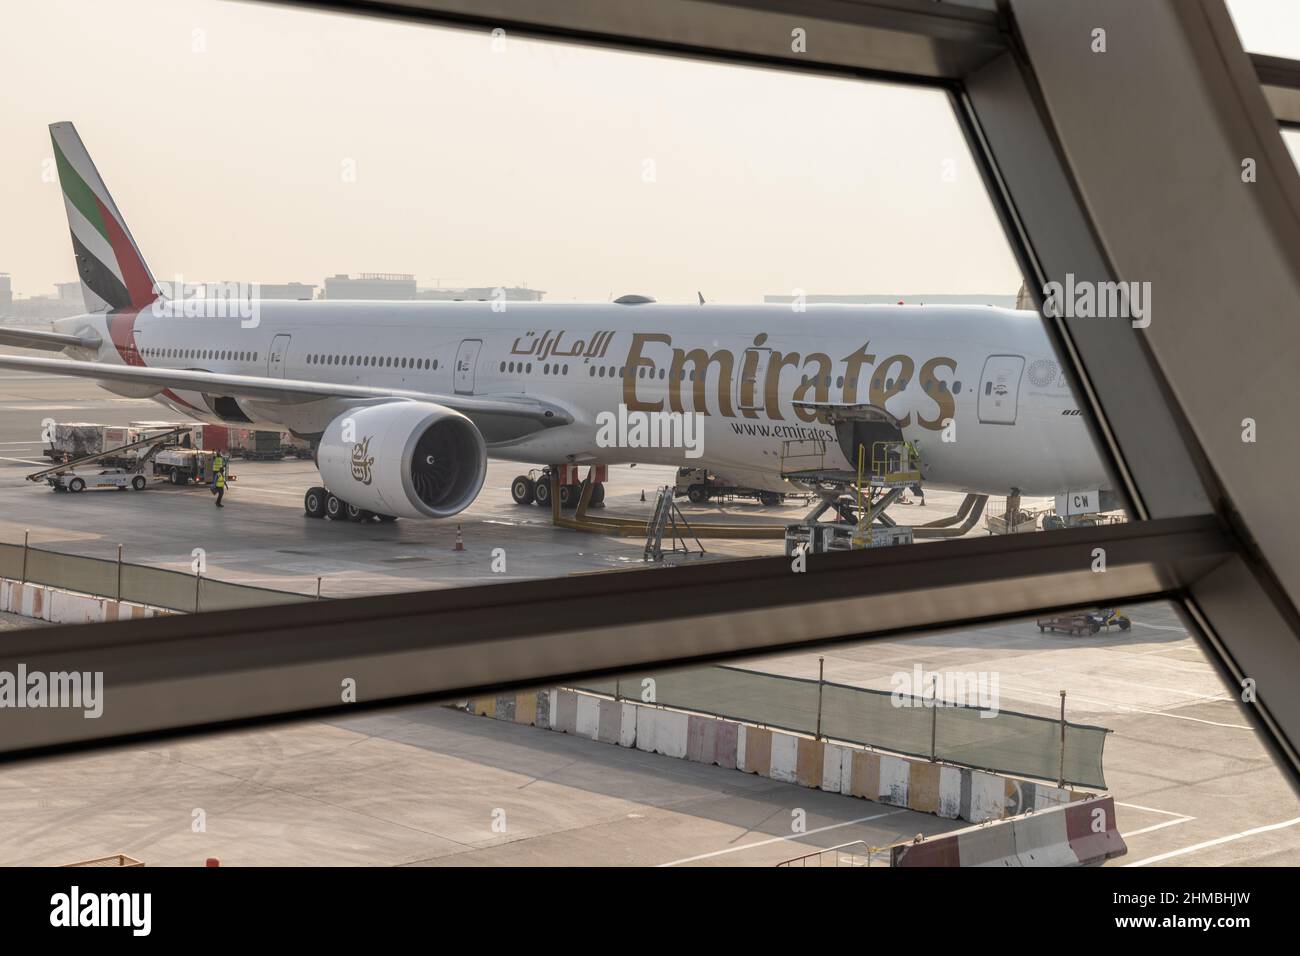 Dubai, UAE - September 2021: Emirates Airlines aircraft in Dubai Airport, UAE. Emirates is an airline based in Dubai, UAE Stock Photo